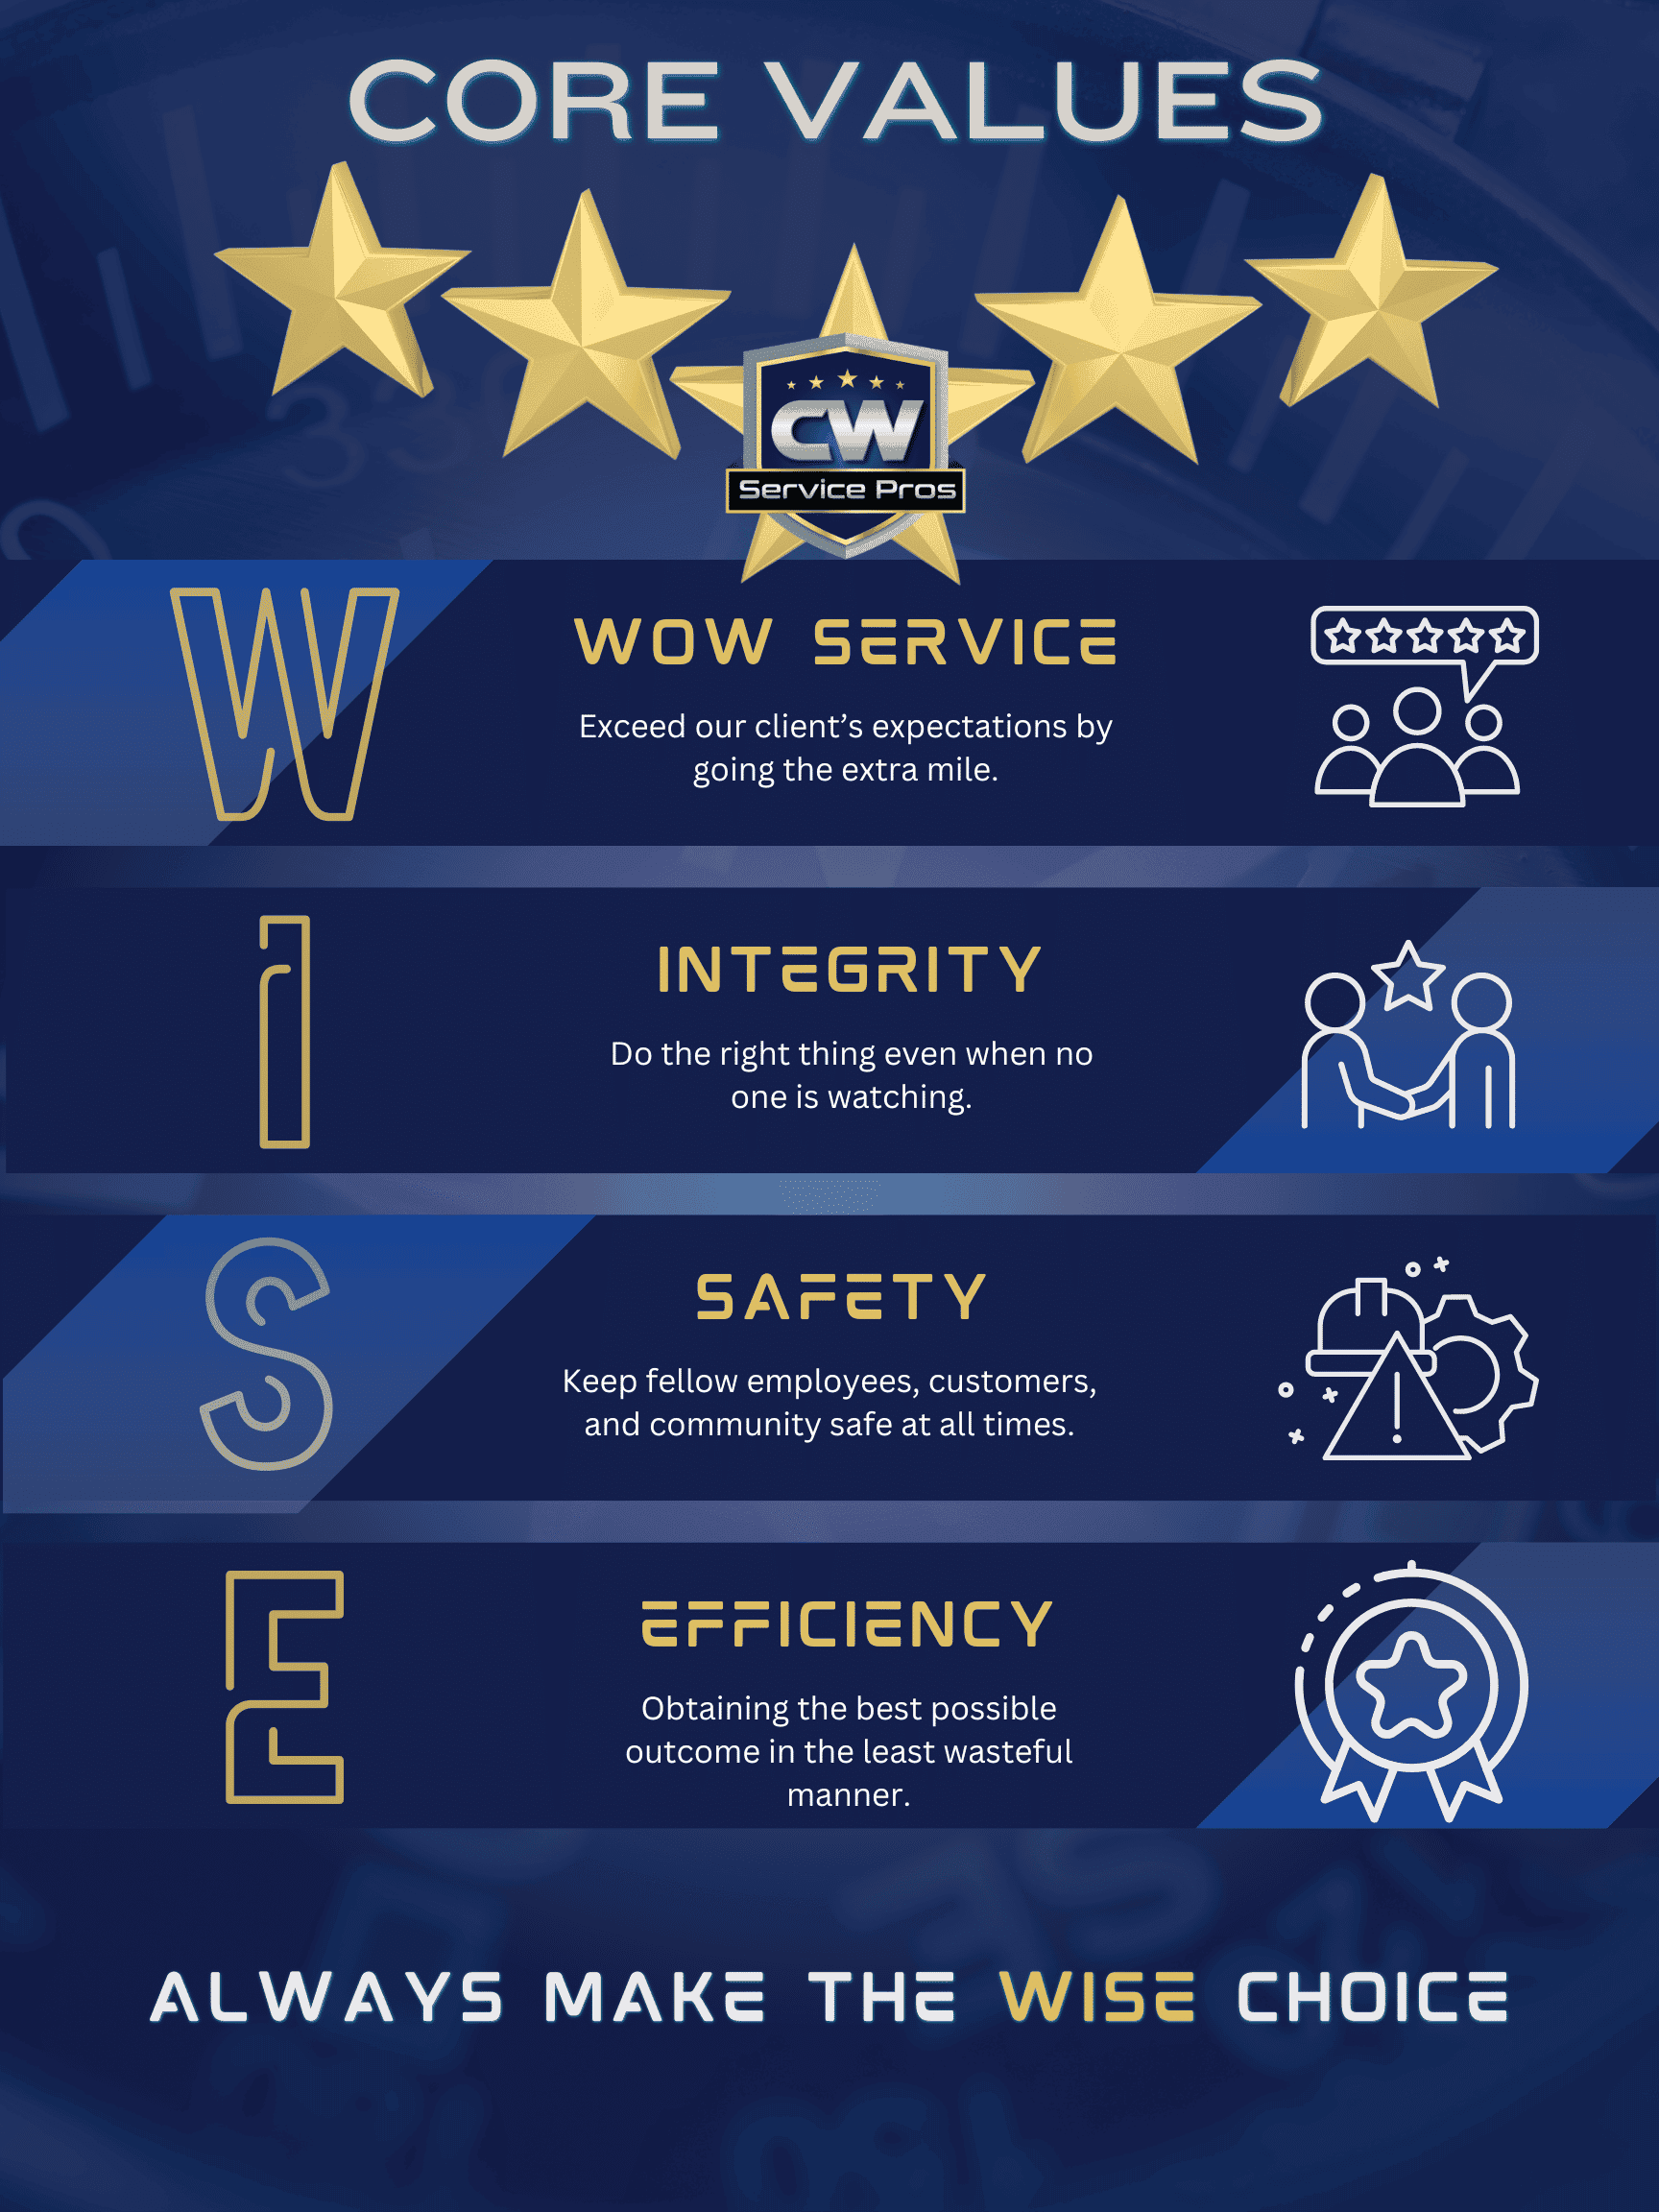 CW-Service-Pros-Core-Values